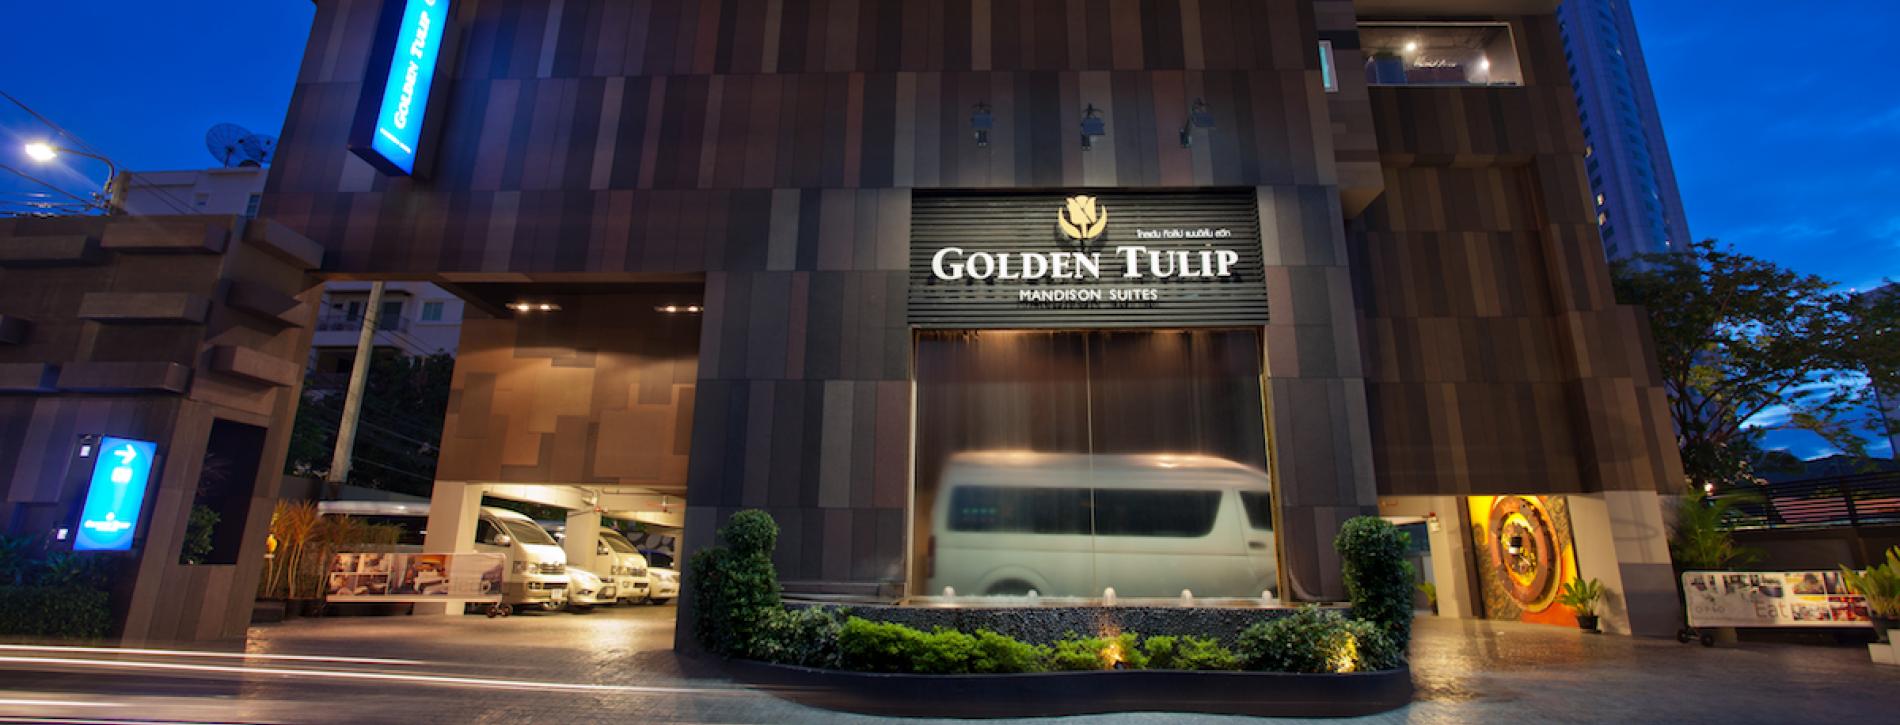 My Travelution - Travel Club - Golden Tulip Mandison Suites